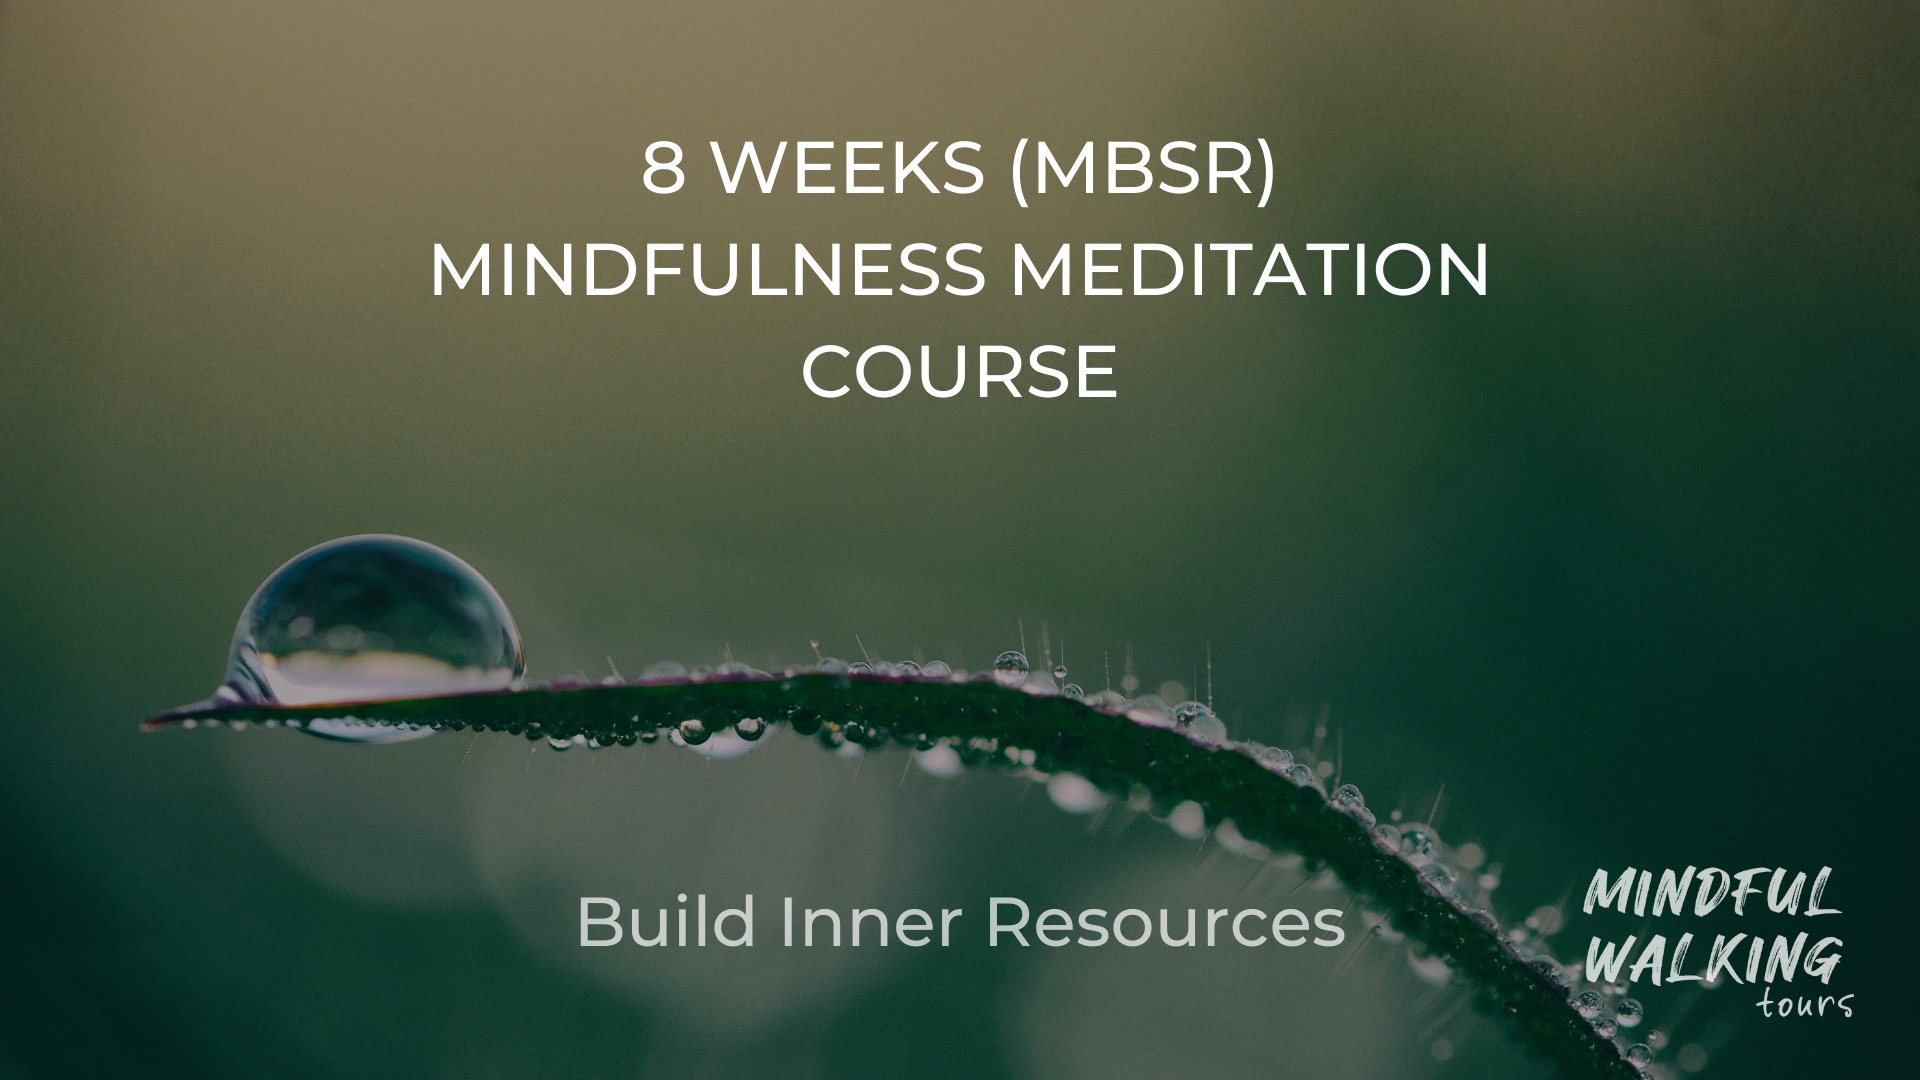 8 WEEKS MINDFULNESS MEDITATION COURSE